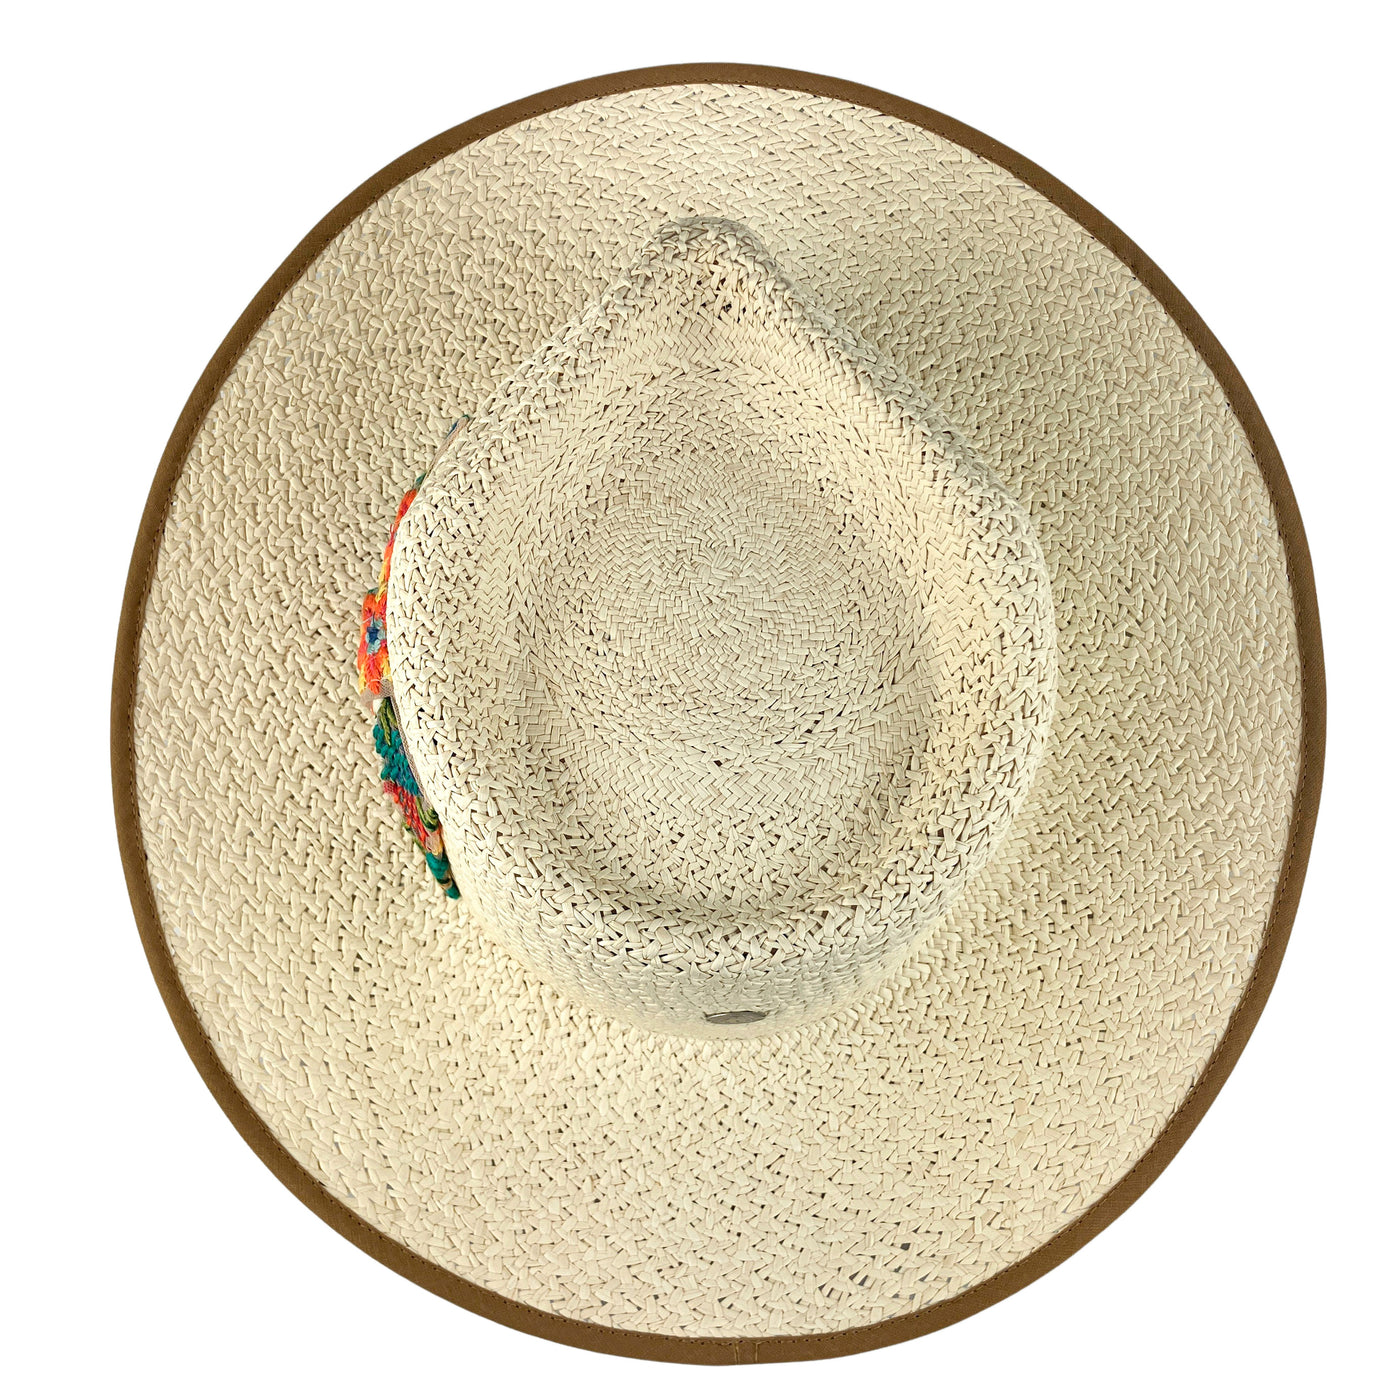 Freya Petunia Hat in Natural - Discounts on Freya at UAL